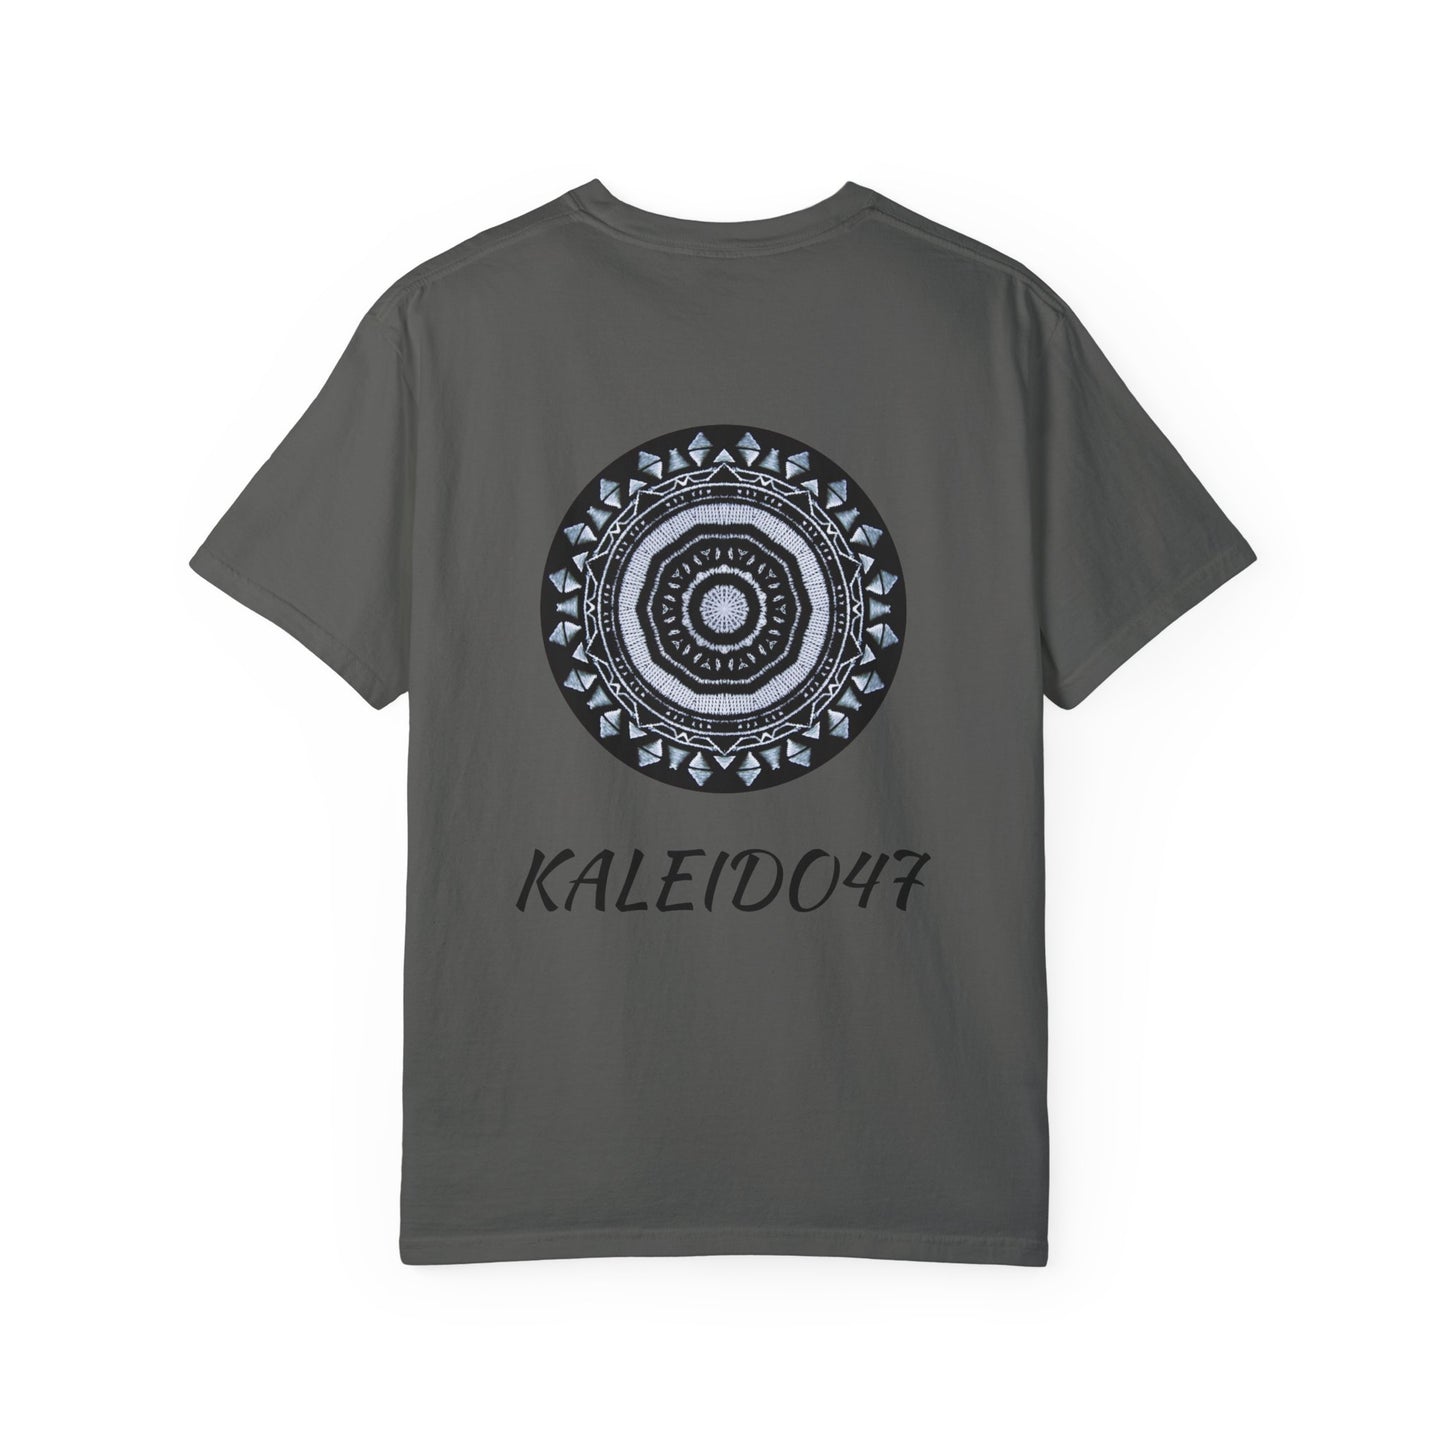 Men's K47 Cymatic Prt T Shirt